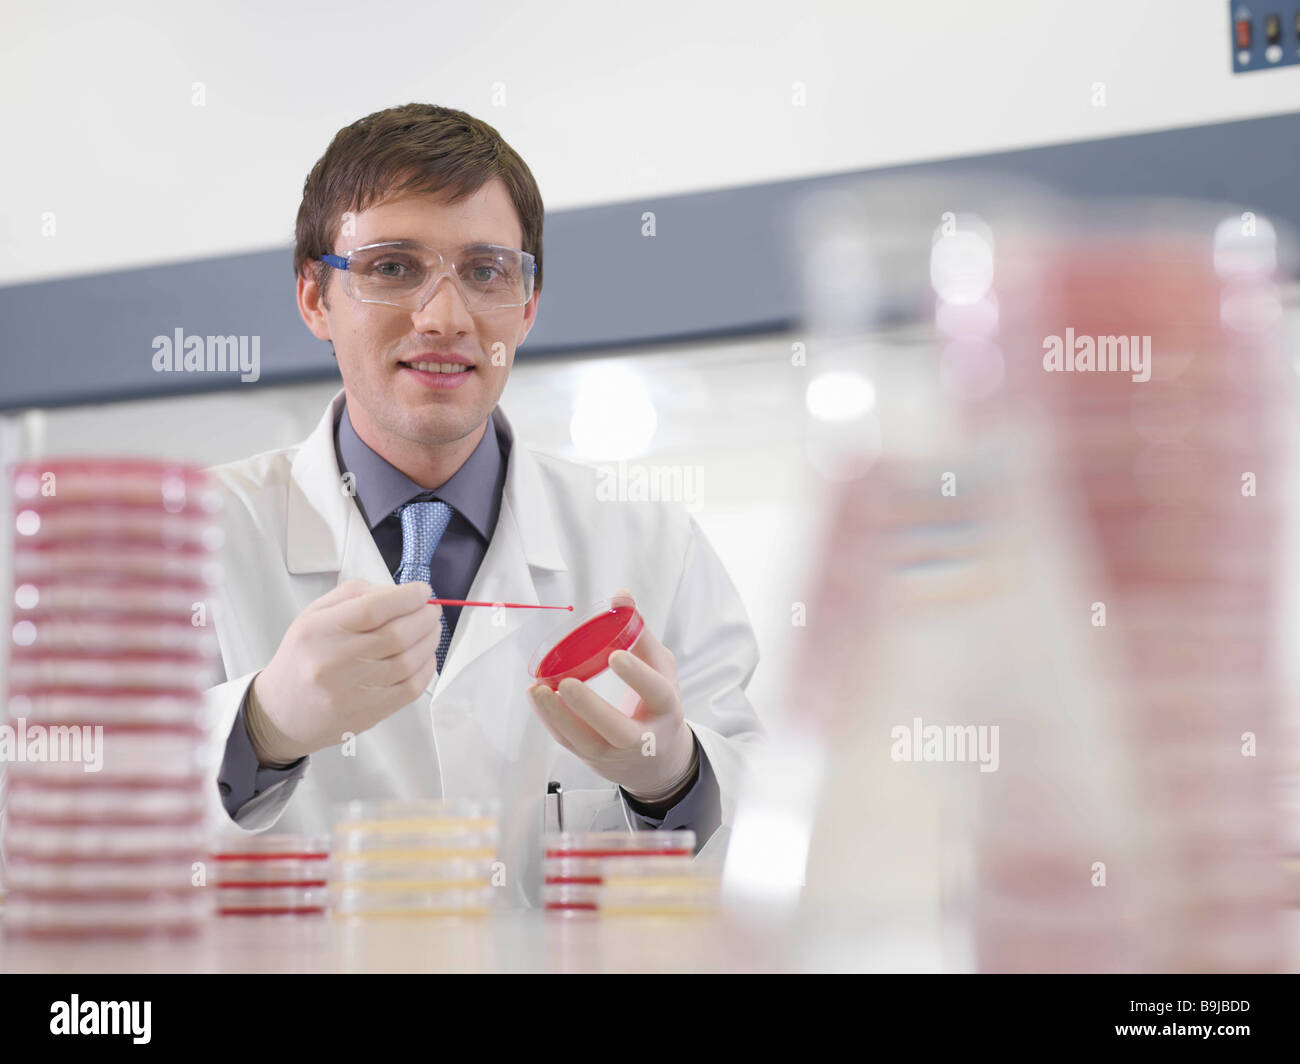 Laboratory technician with petri dish Stock Photo